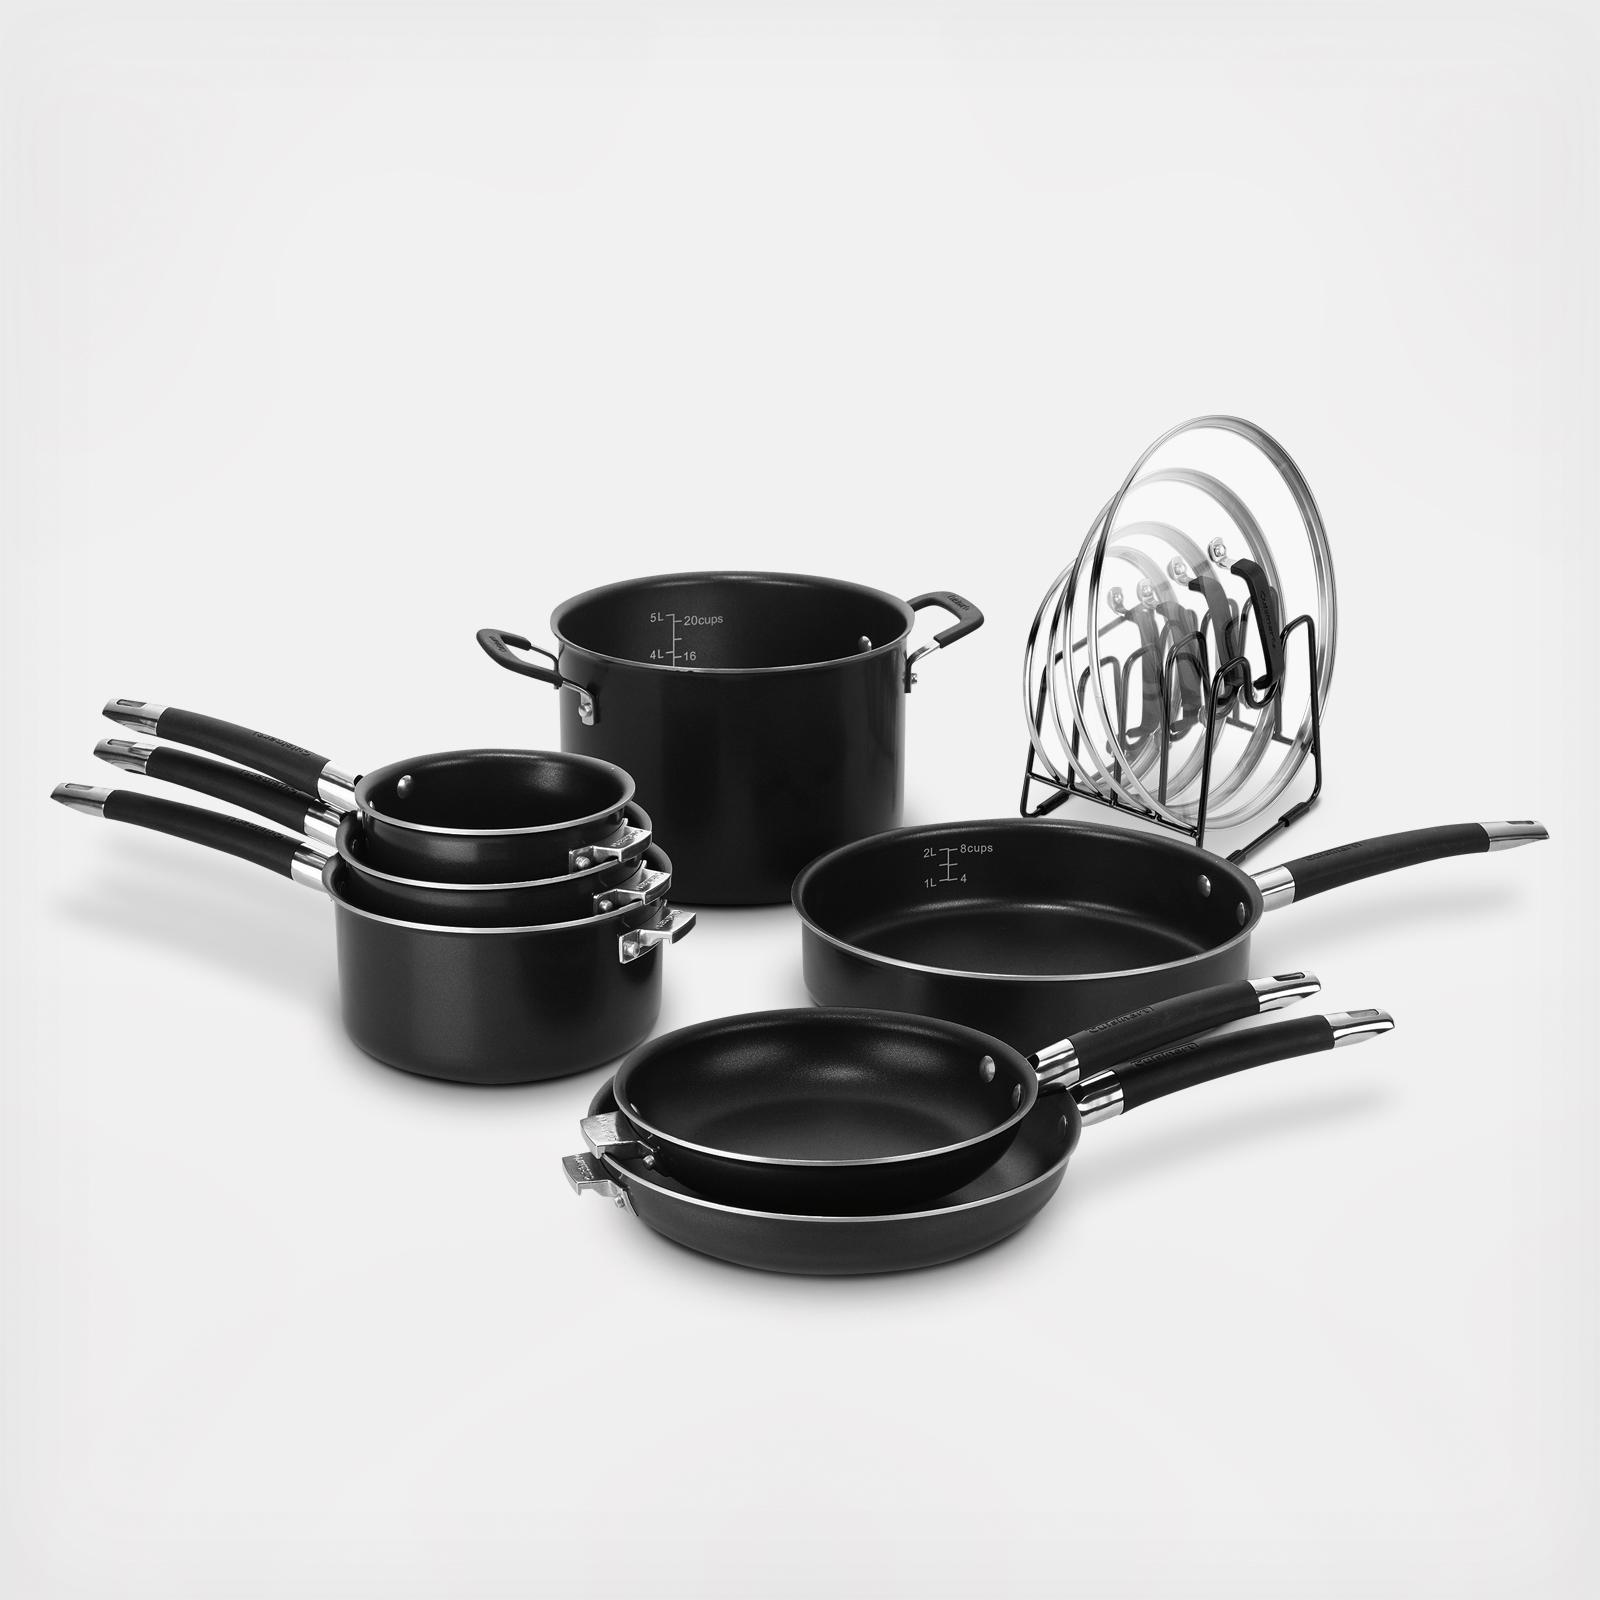 12-Piece SmartNest Non-Stick Aluminum Cookware Set, Cuisinart